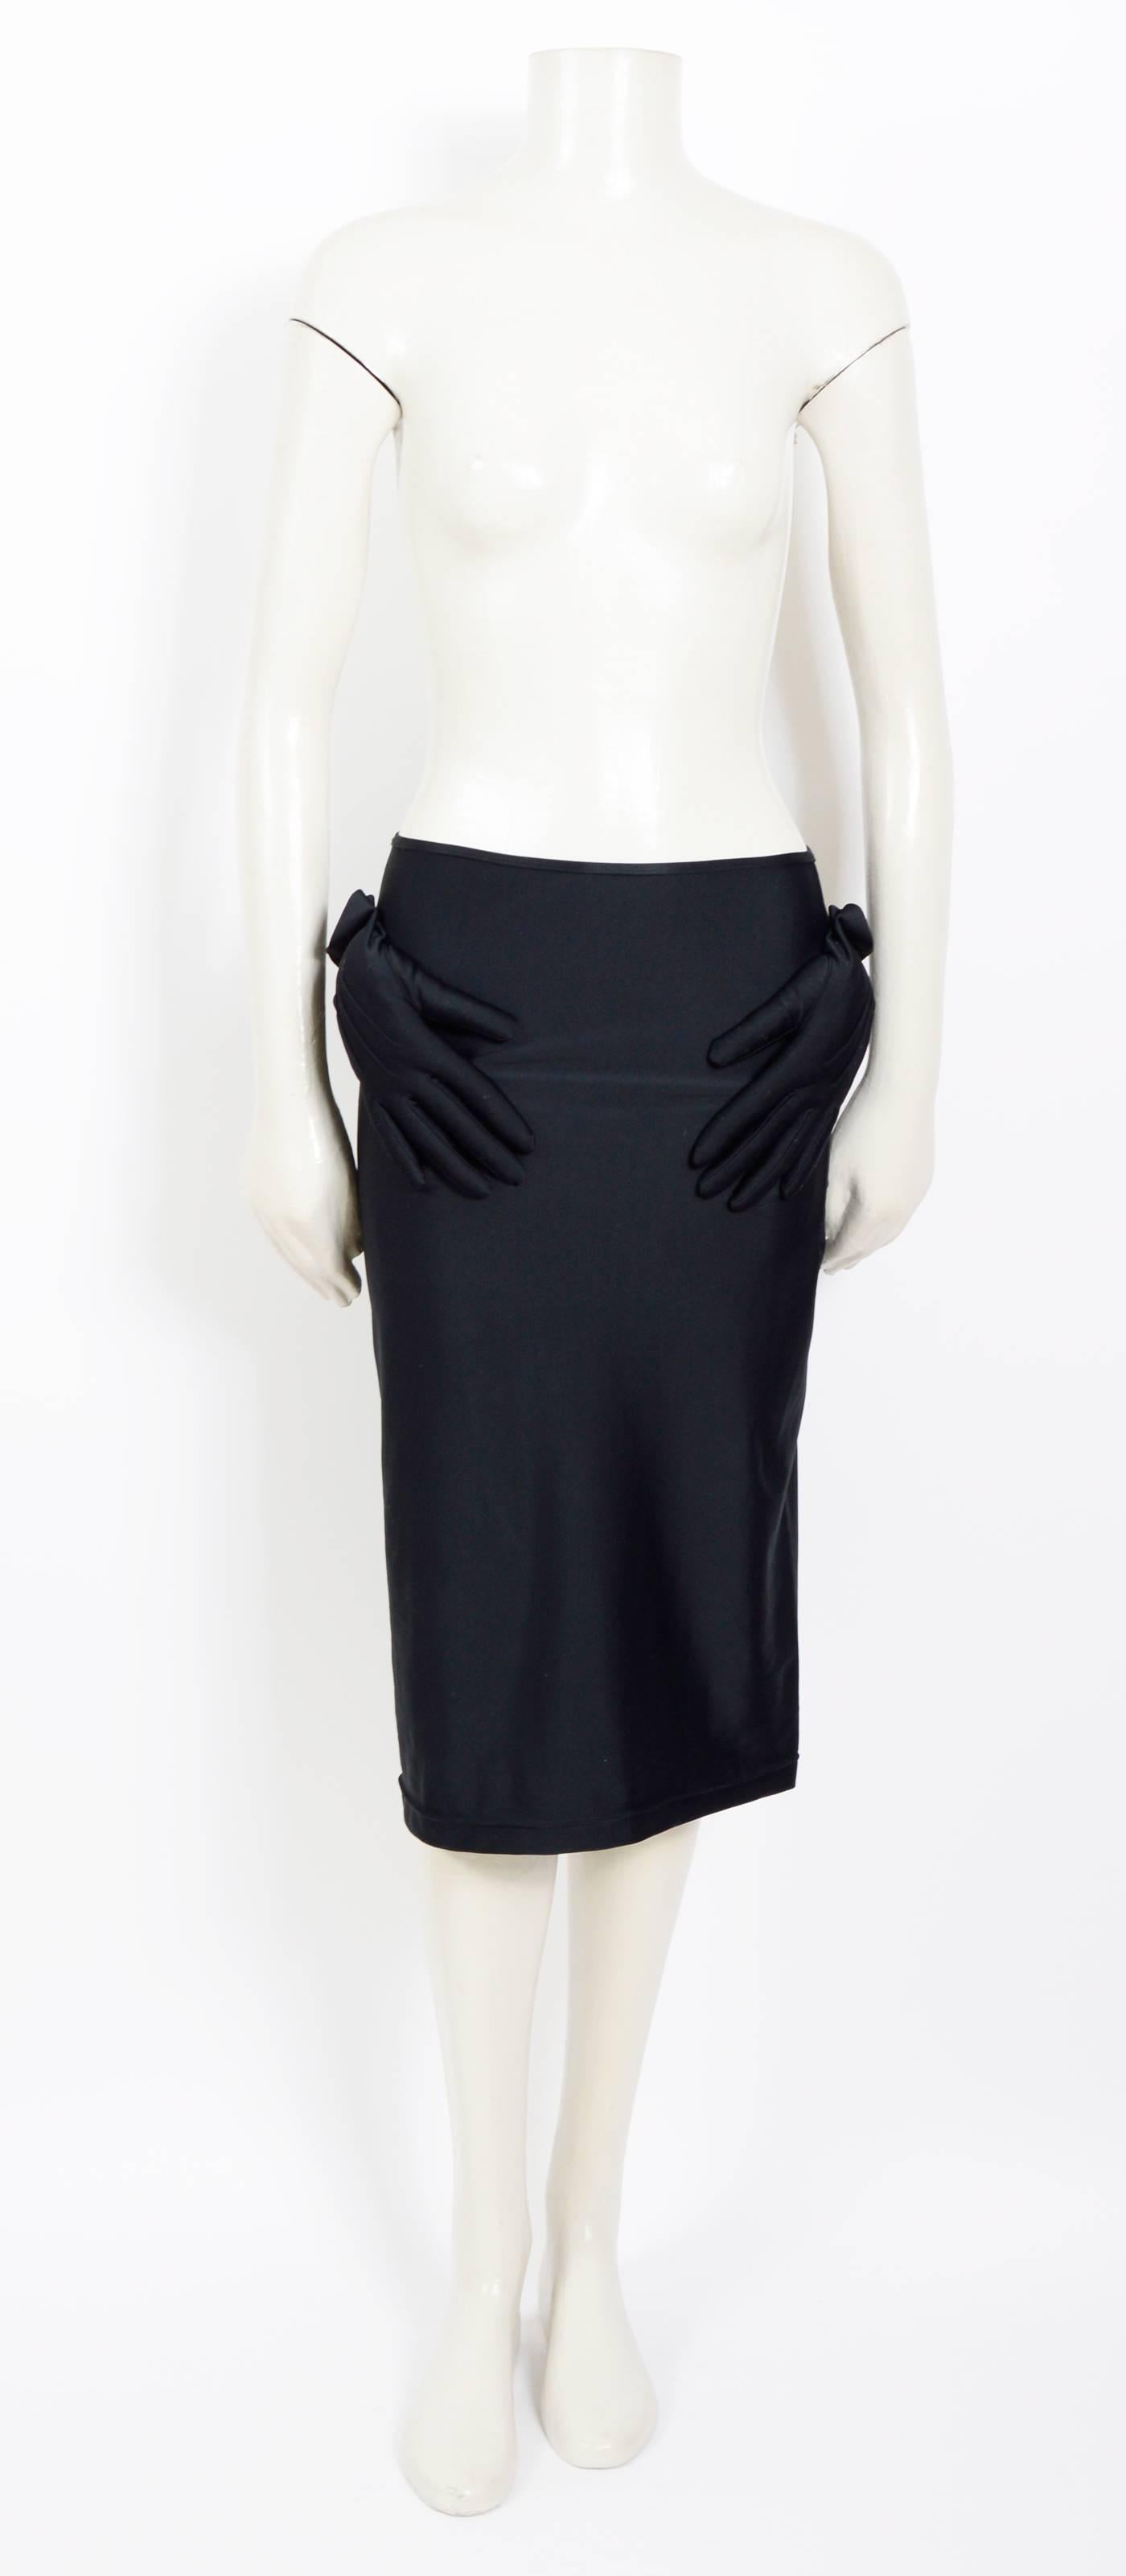 Black Skirt COMME DES GARCONS padded hands.
Fabric has stretch
Measurements taken flat: Waist 13inch/33cm(x2) - Hip 16,5inch/42cm(x2) - Total length 25inch/64cm